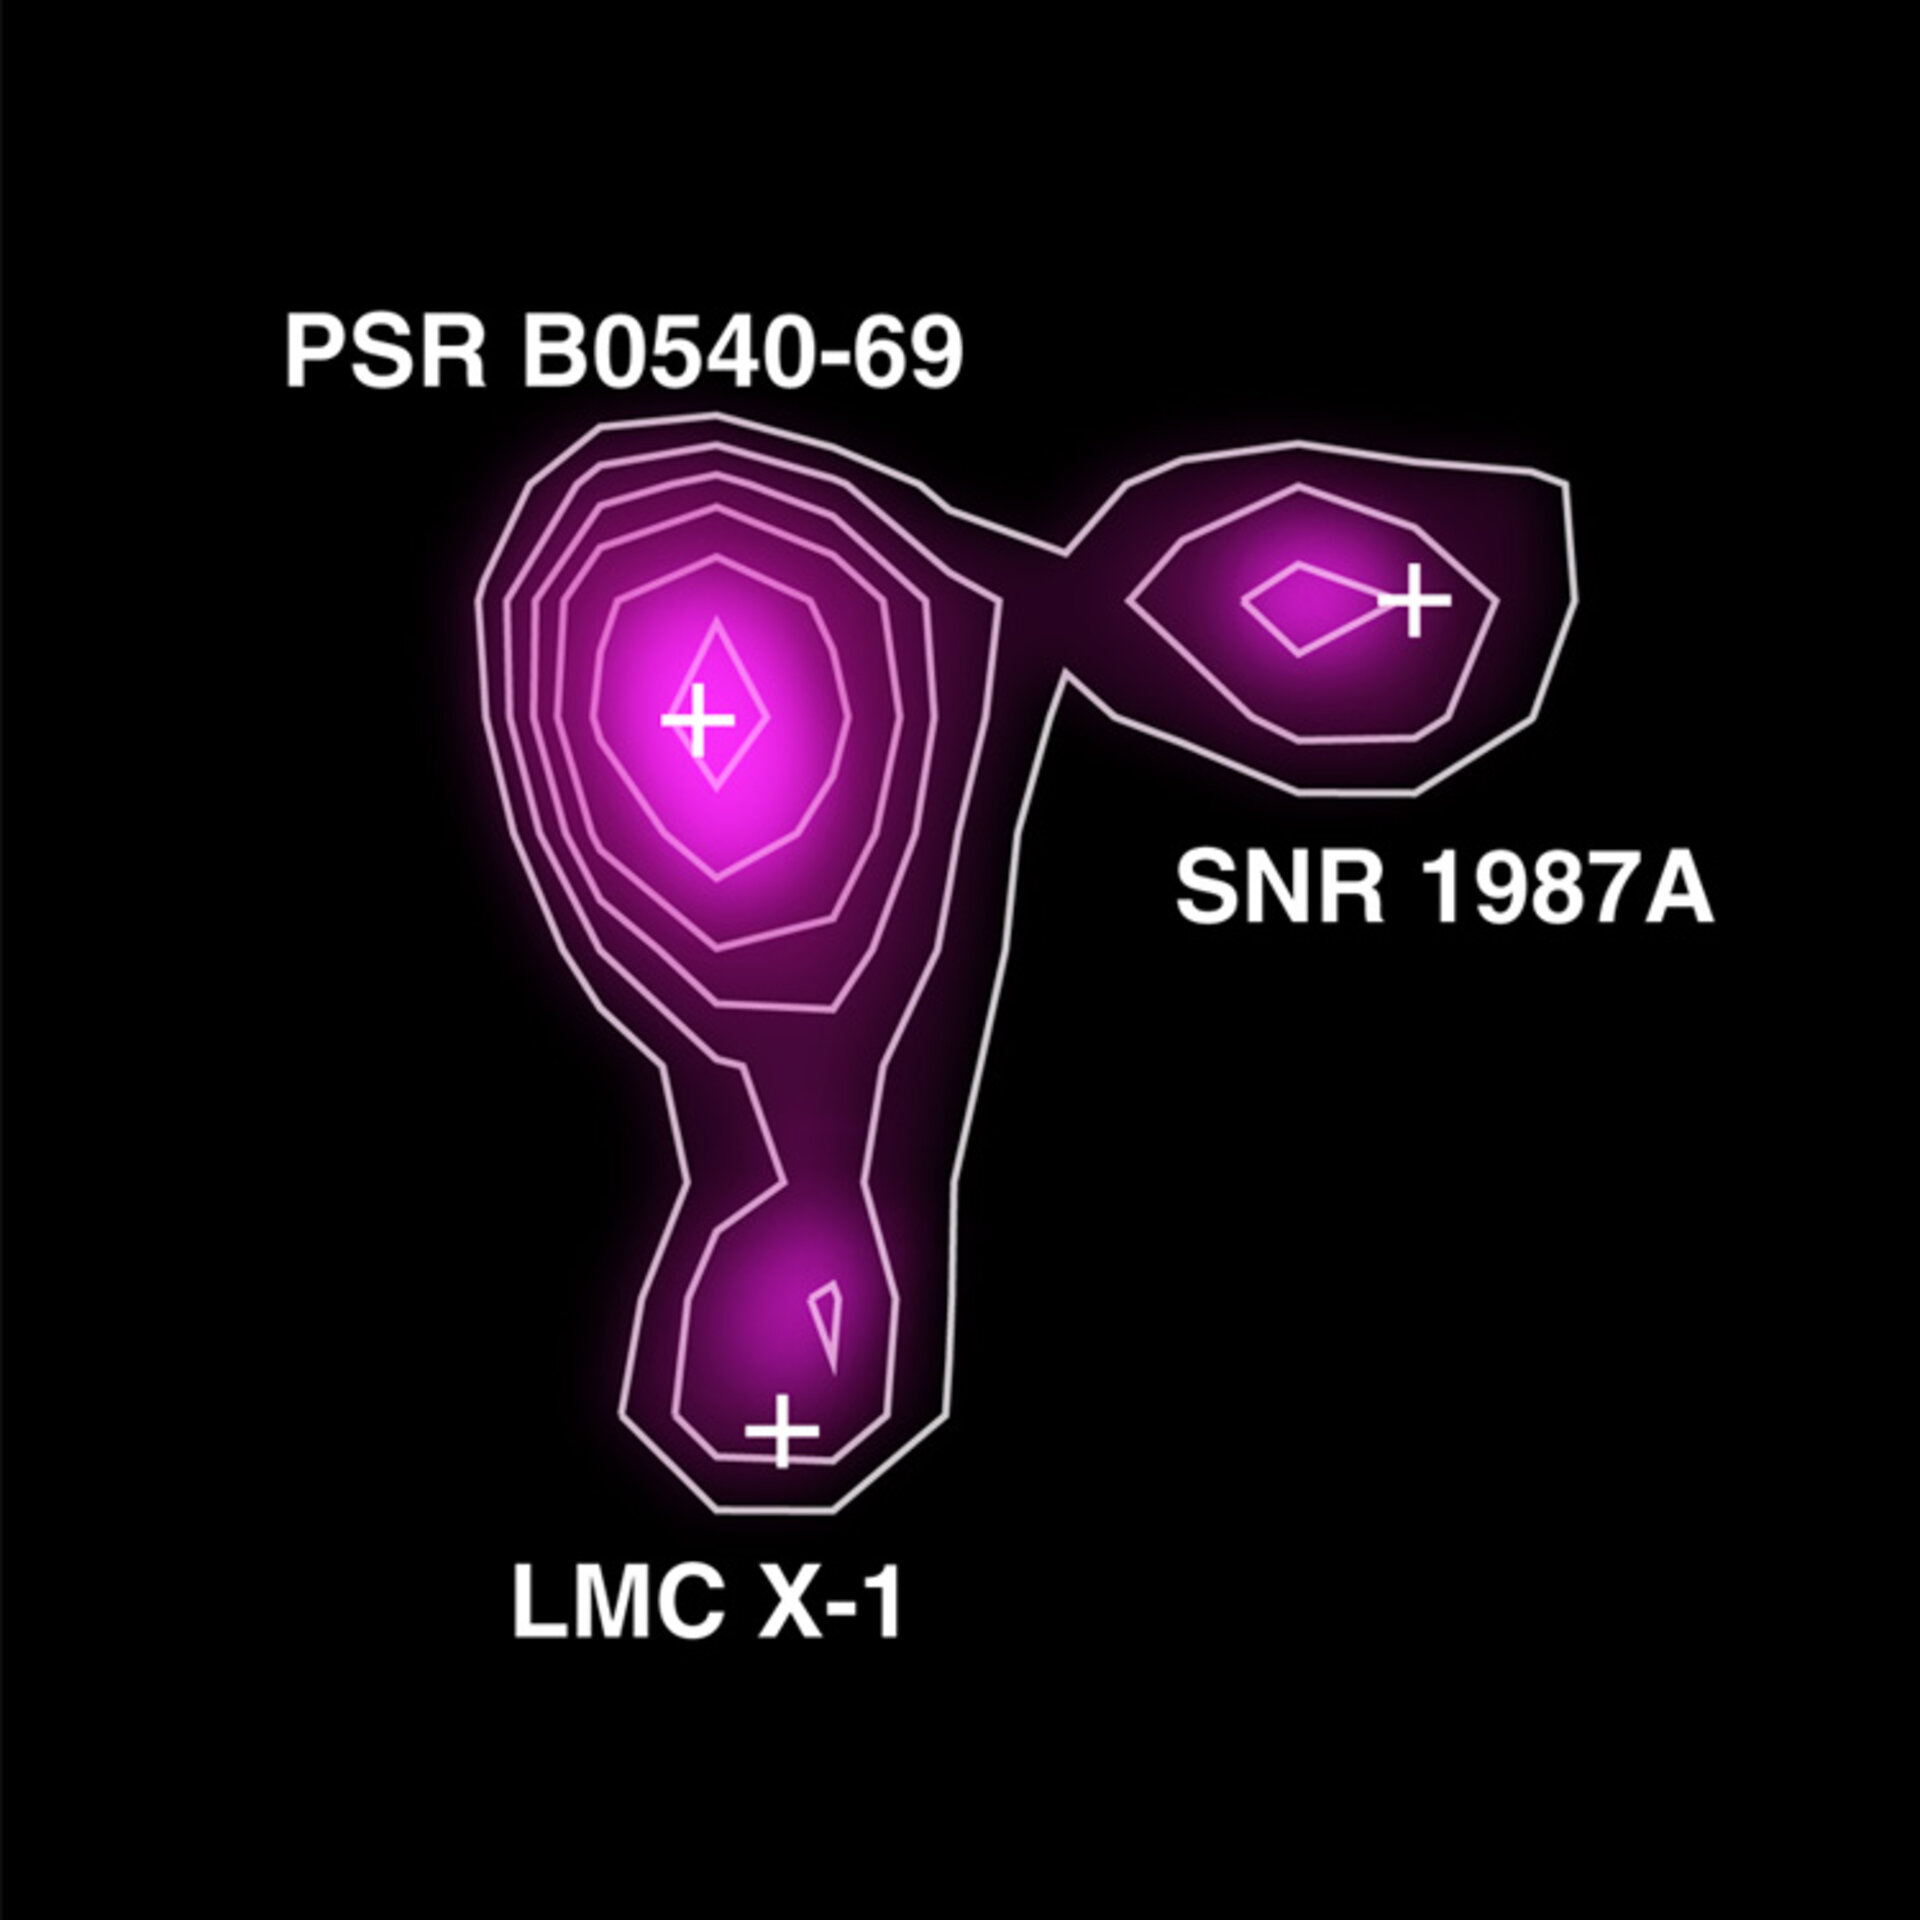 Ti-44 detection in SNR 1987A